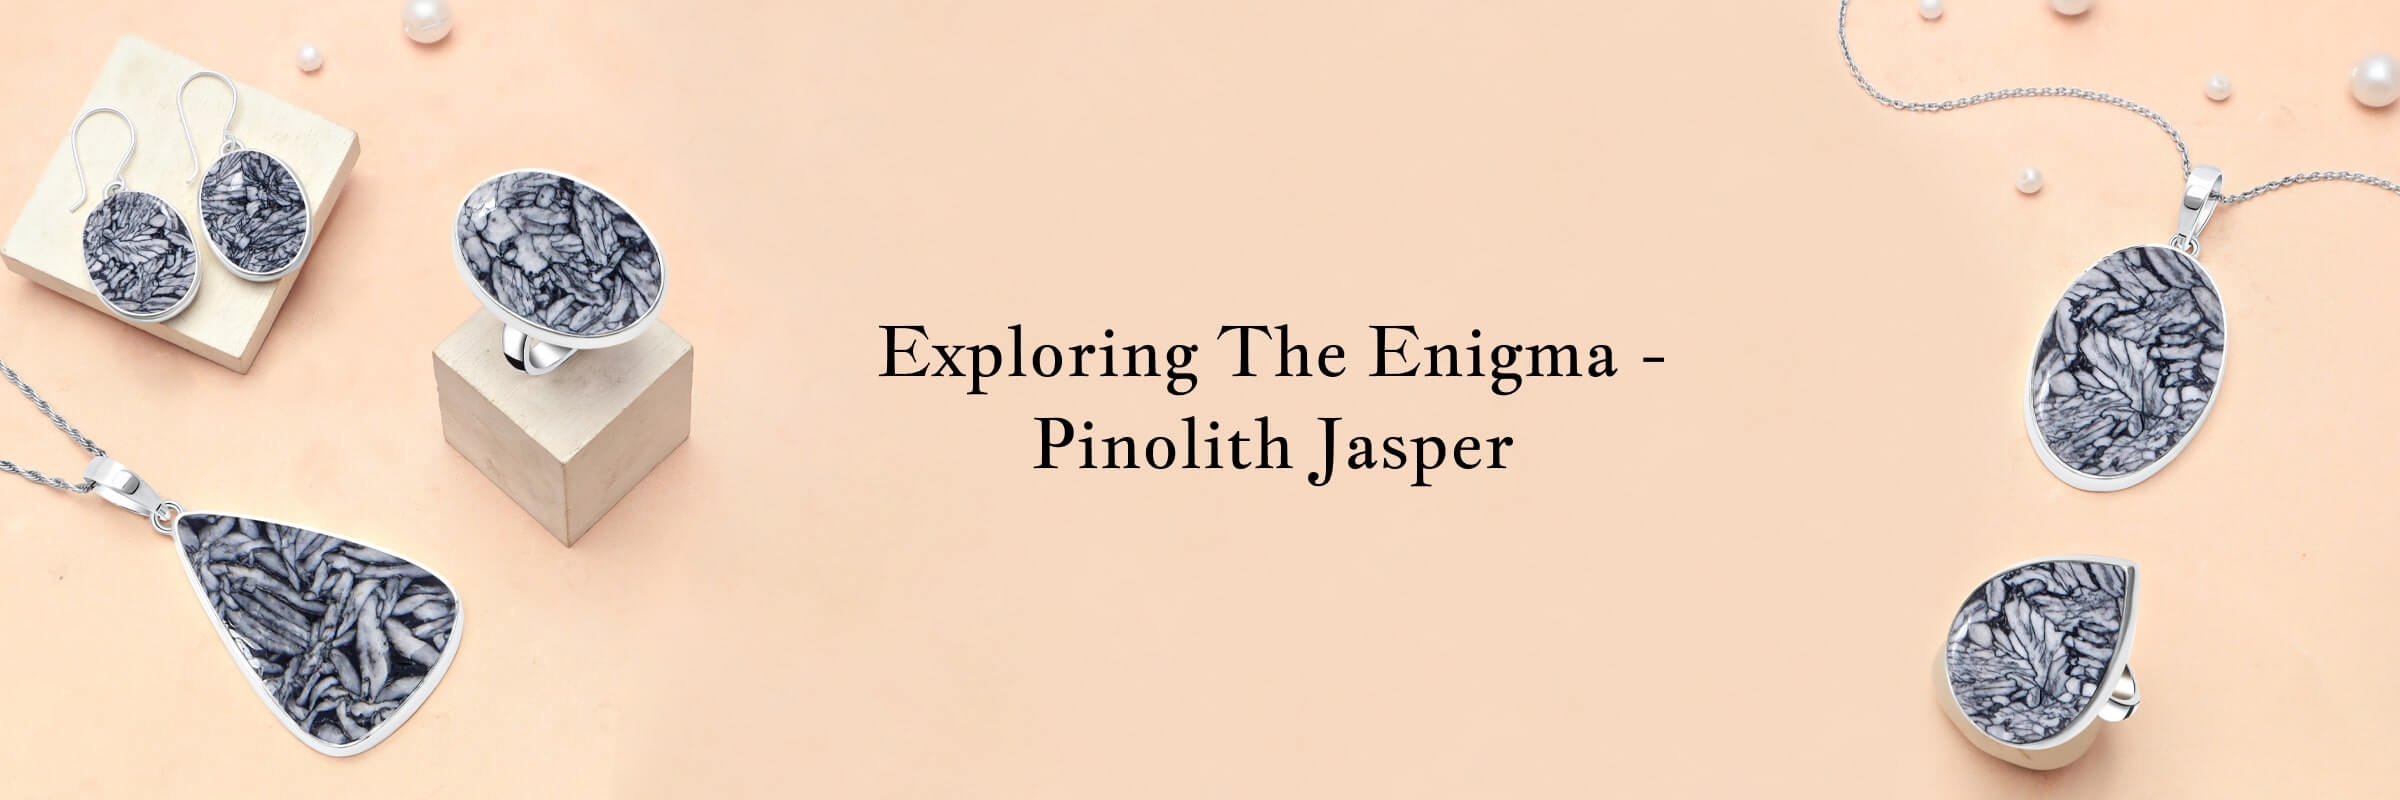 More about Pinolith Jasper